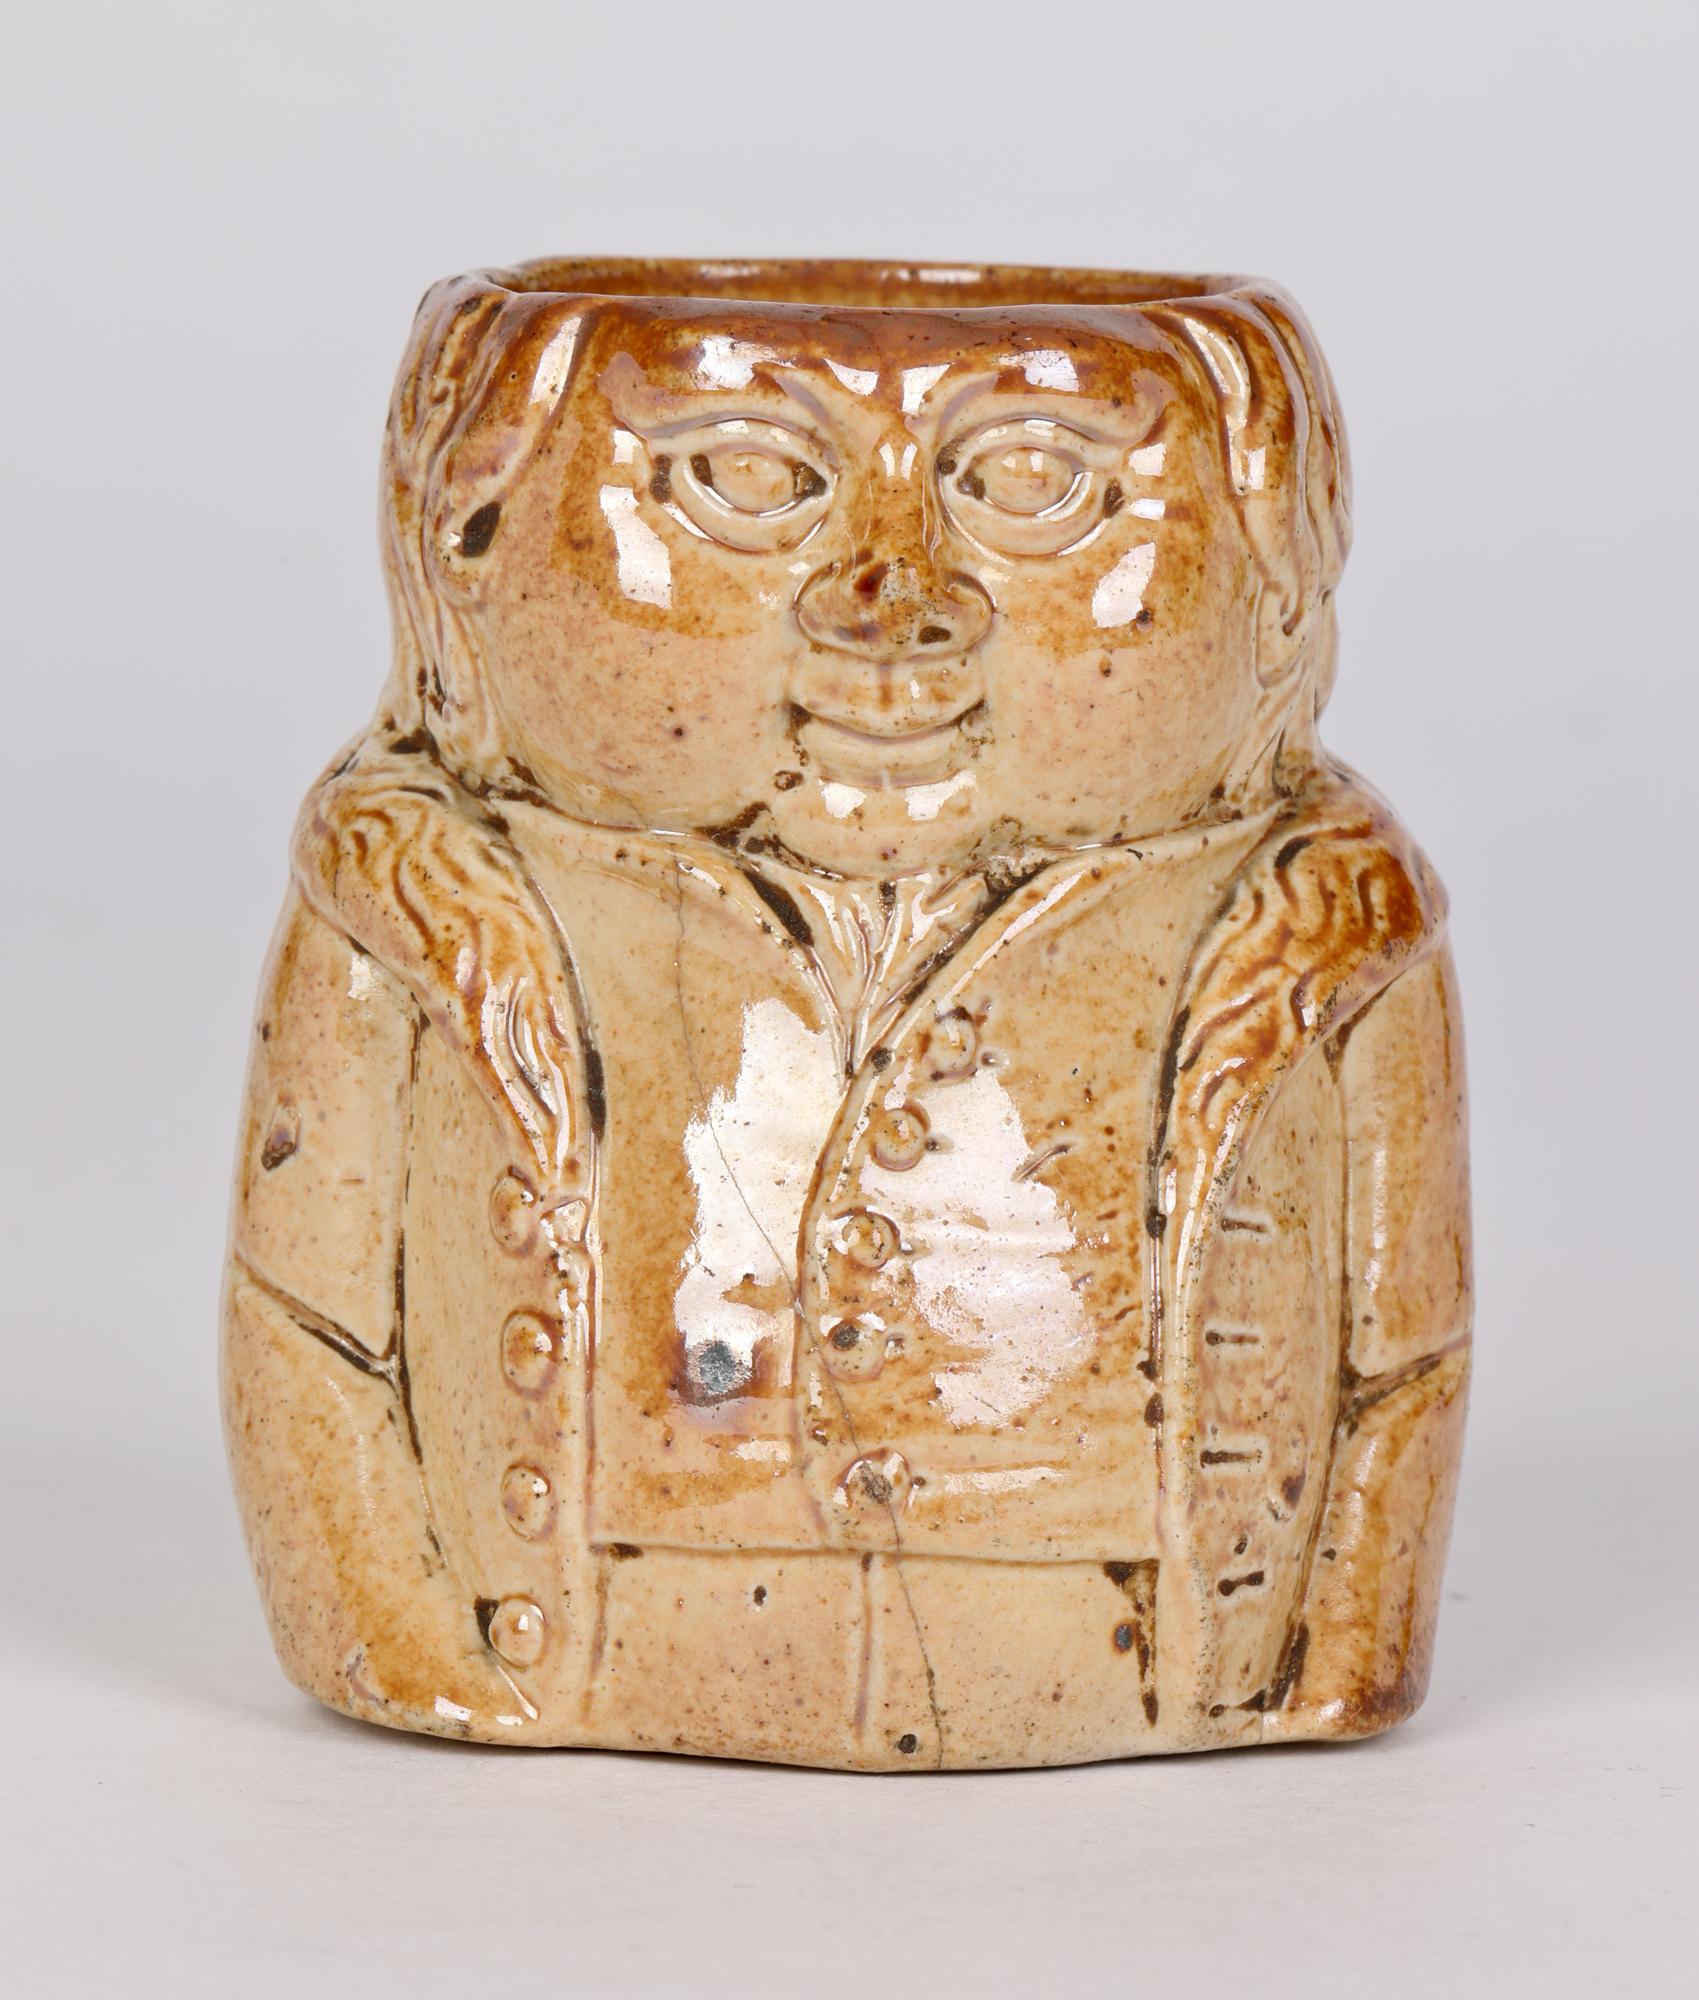 Brampton Rare Salt Glazed Stoneware Character Modelled Container For Sale 4